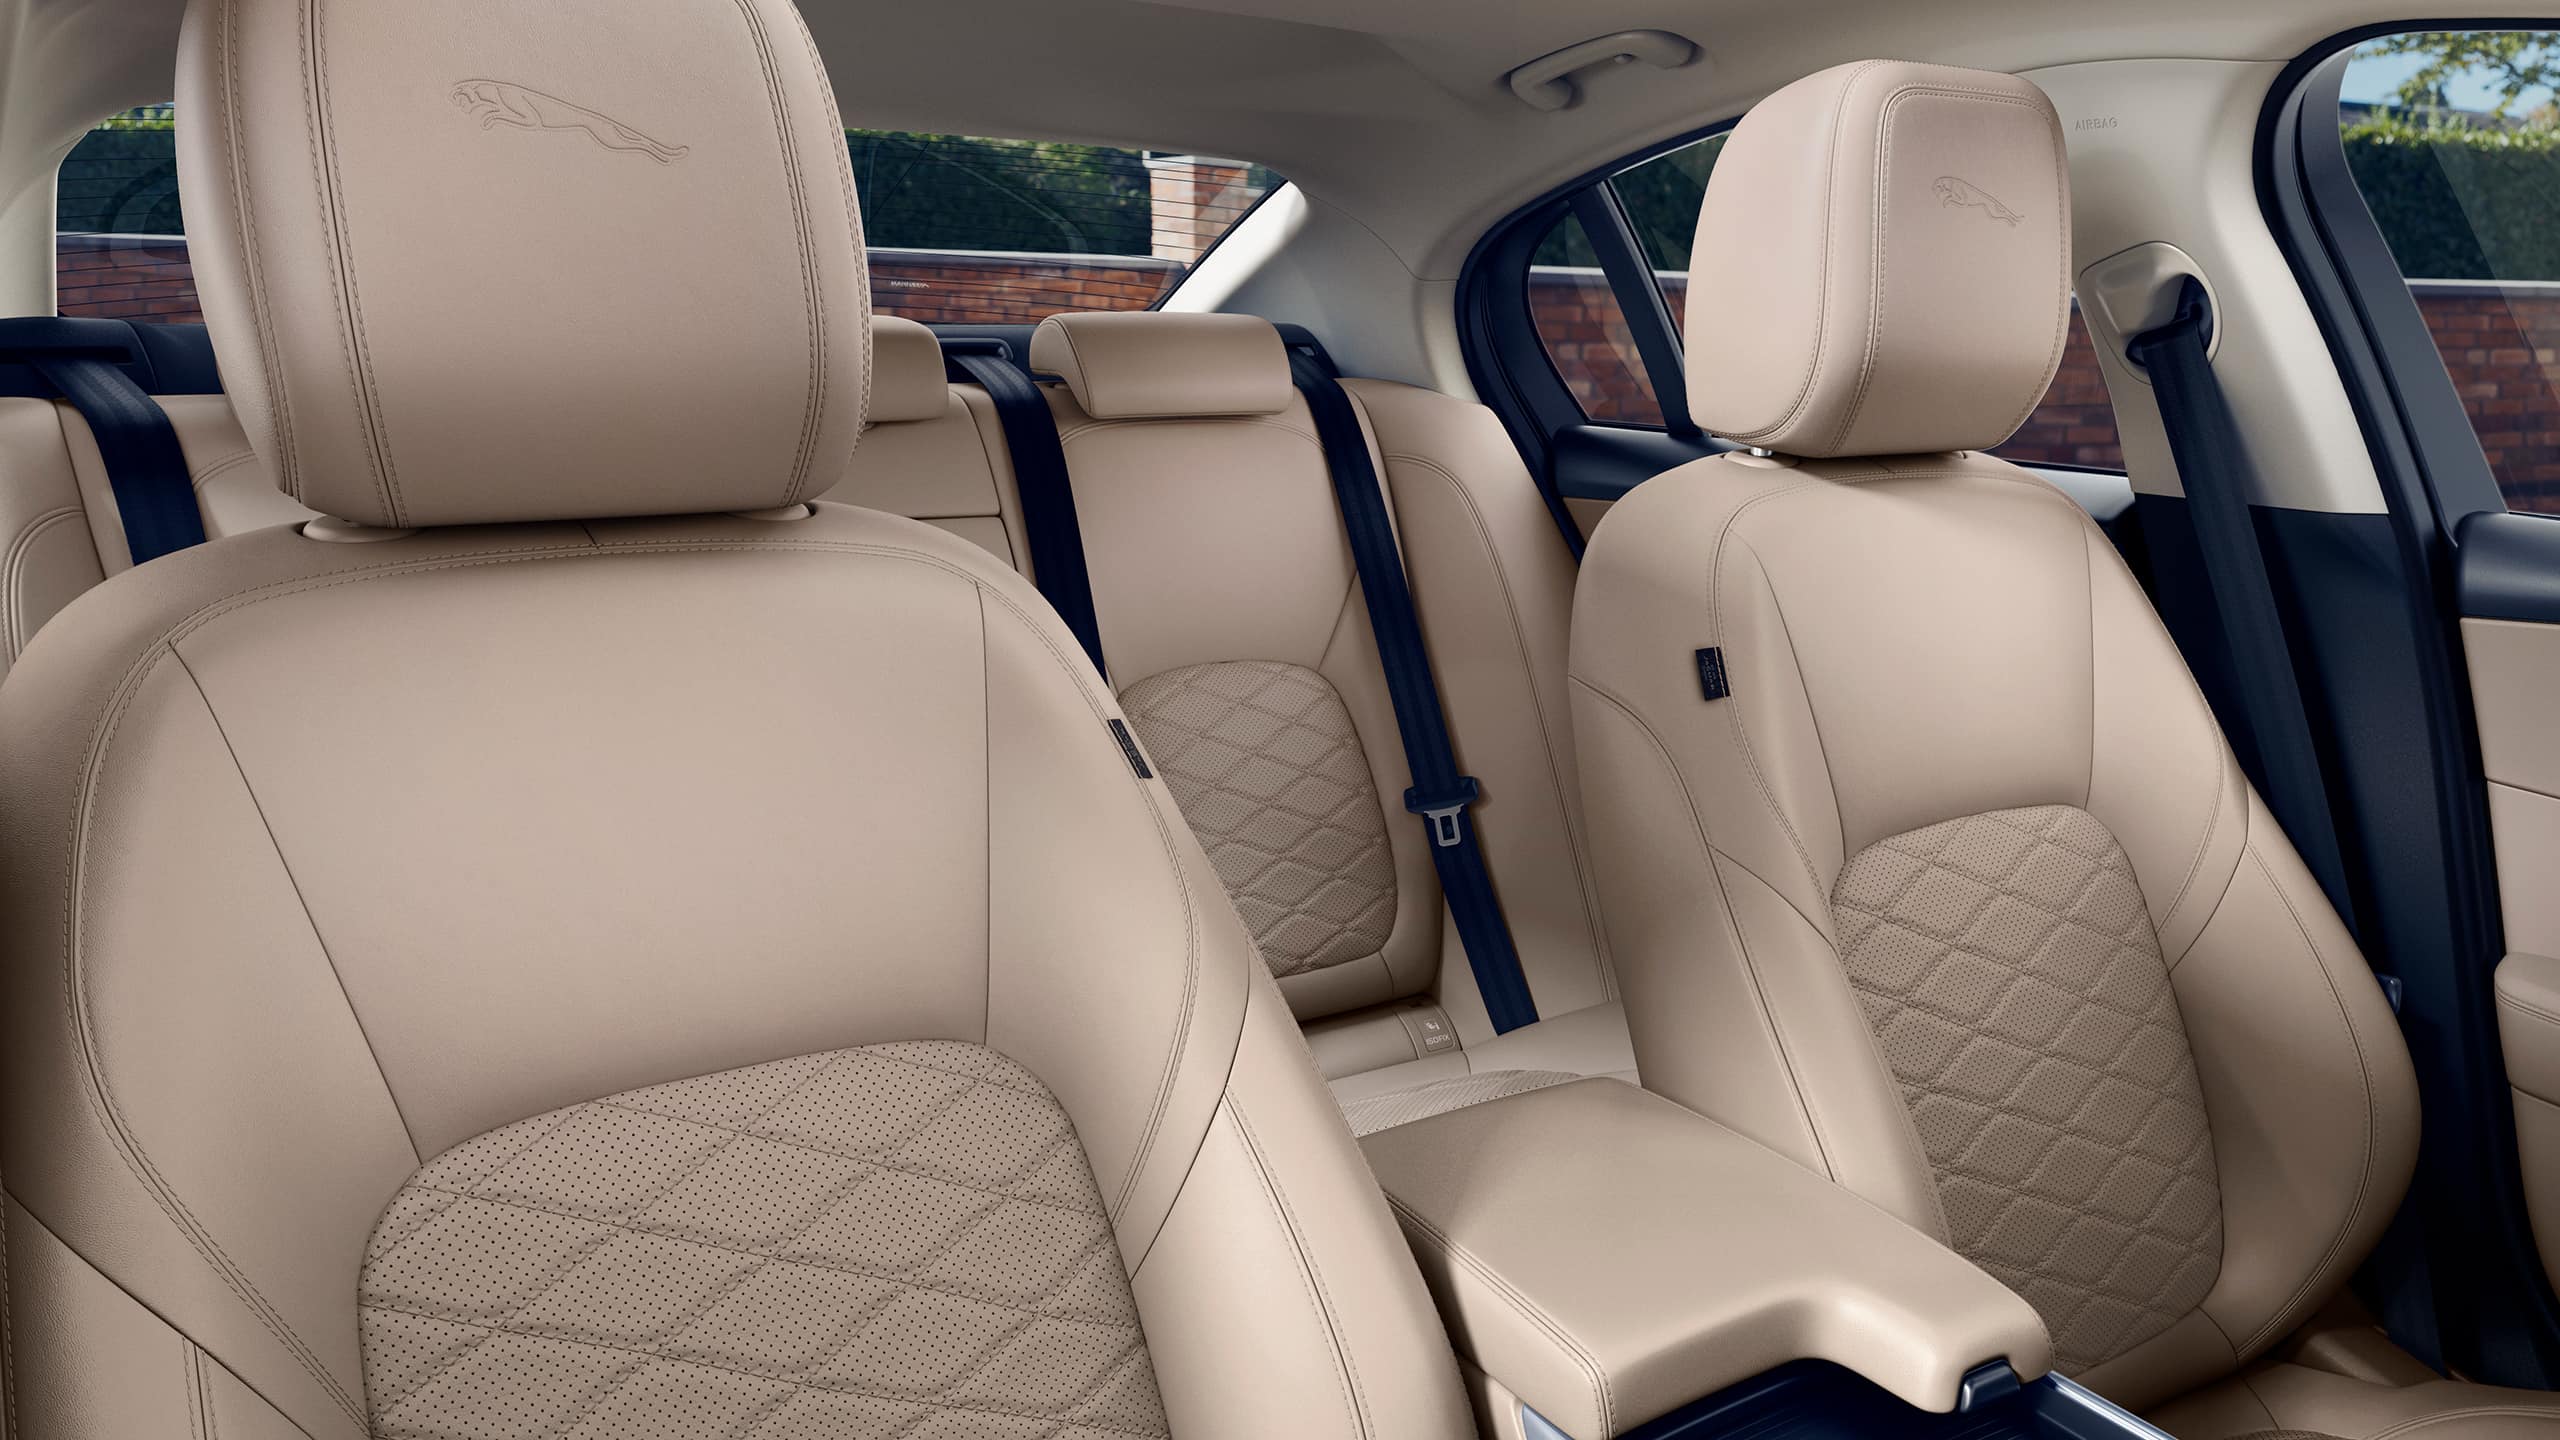 Jaguar XE Close view of Interior Seats